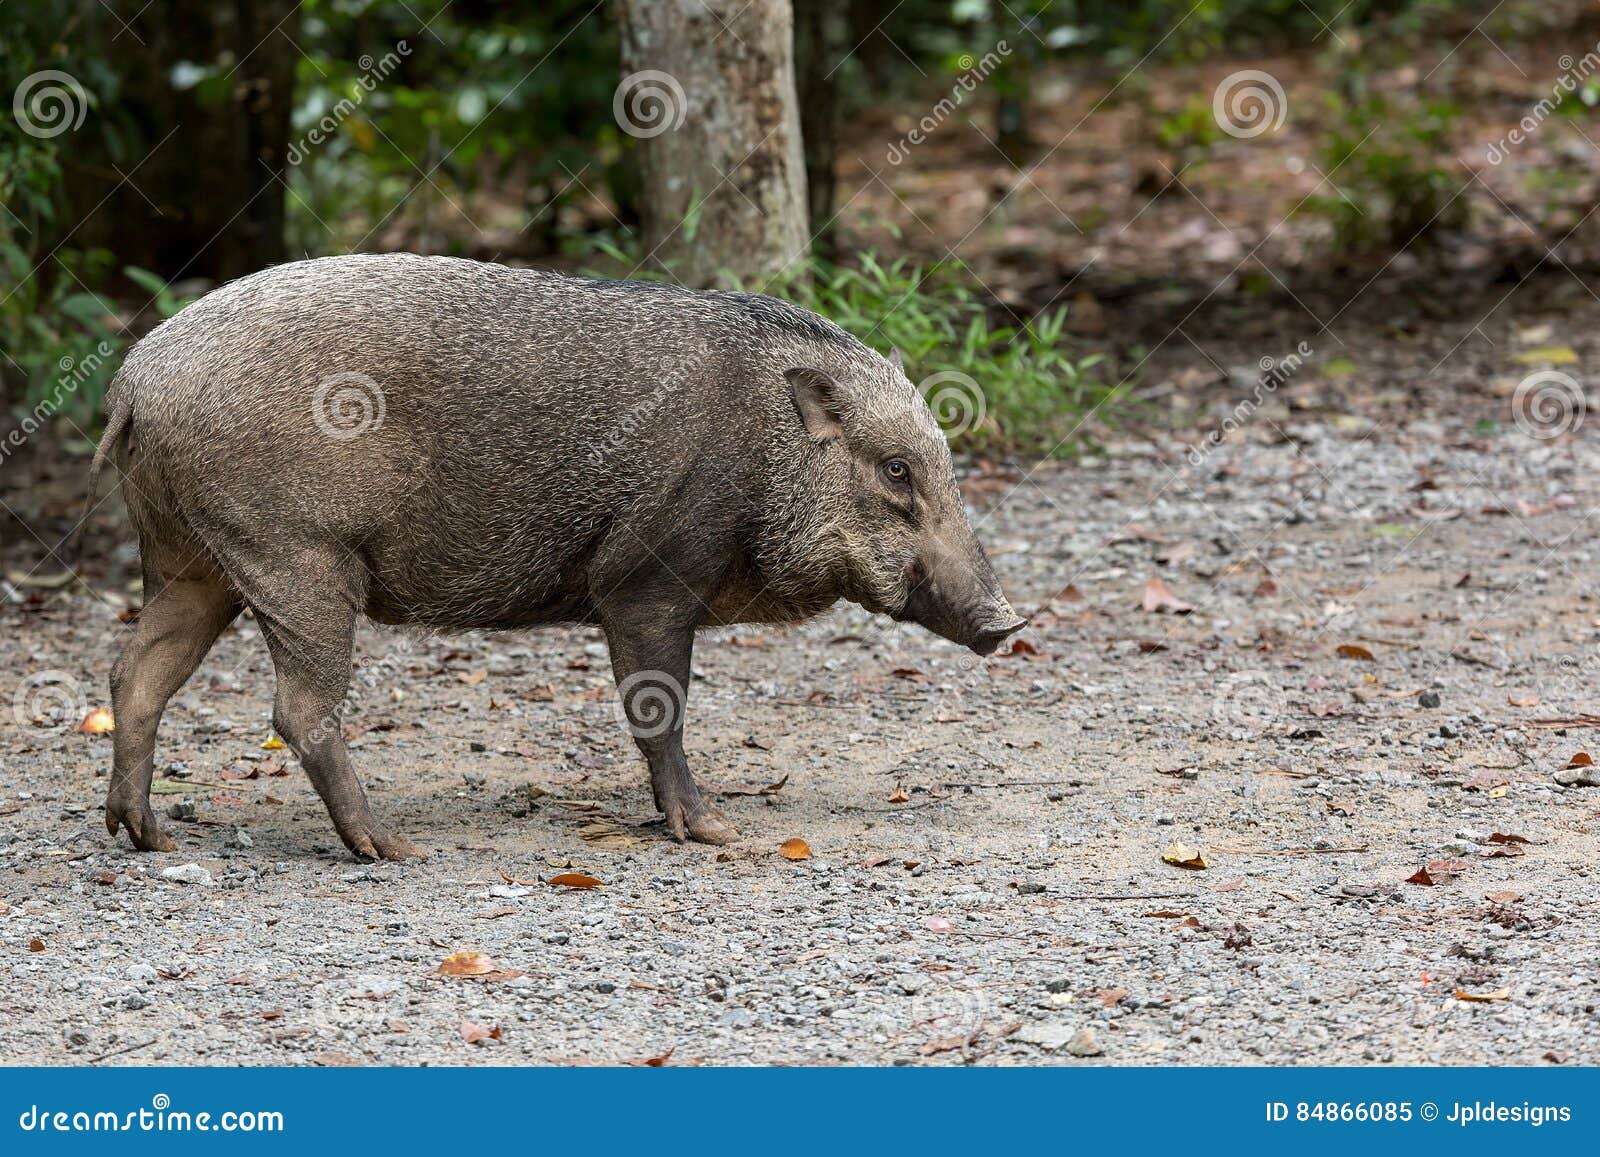 wild boar at pulau ubin island